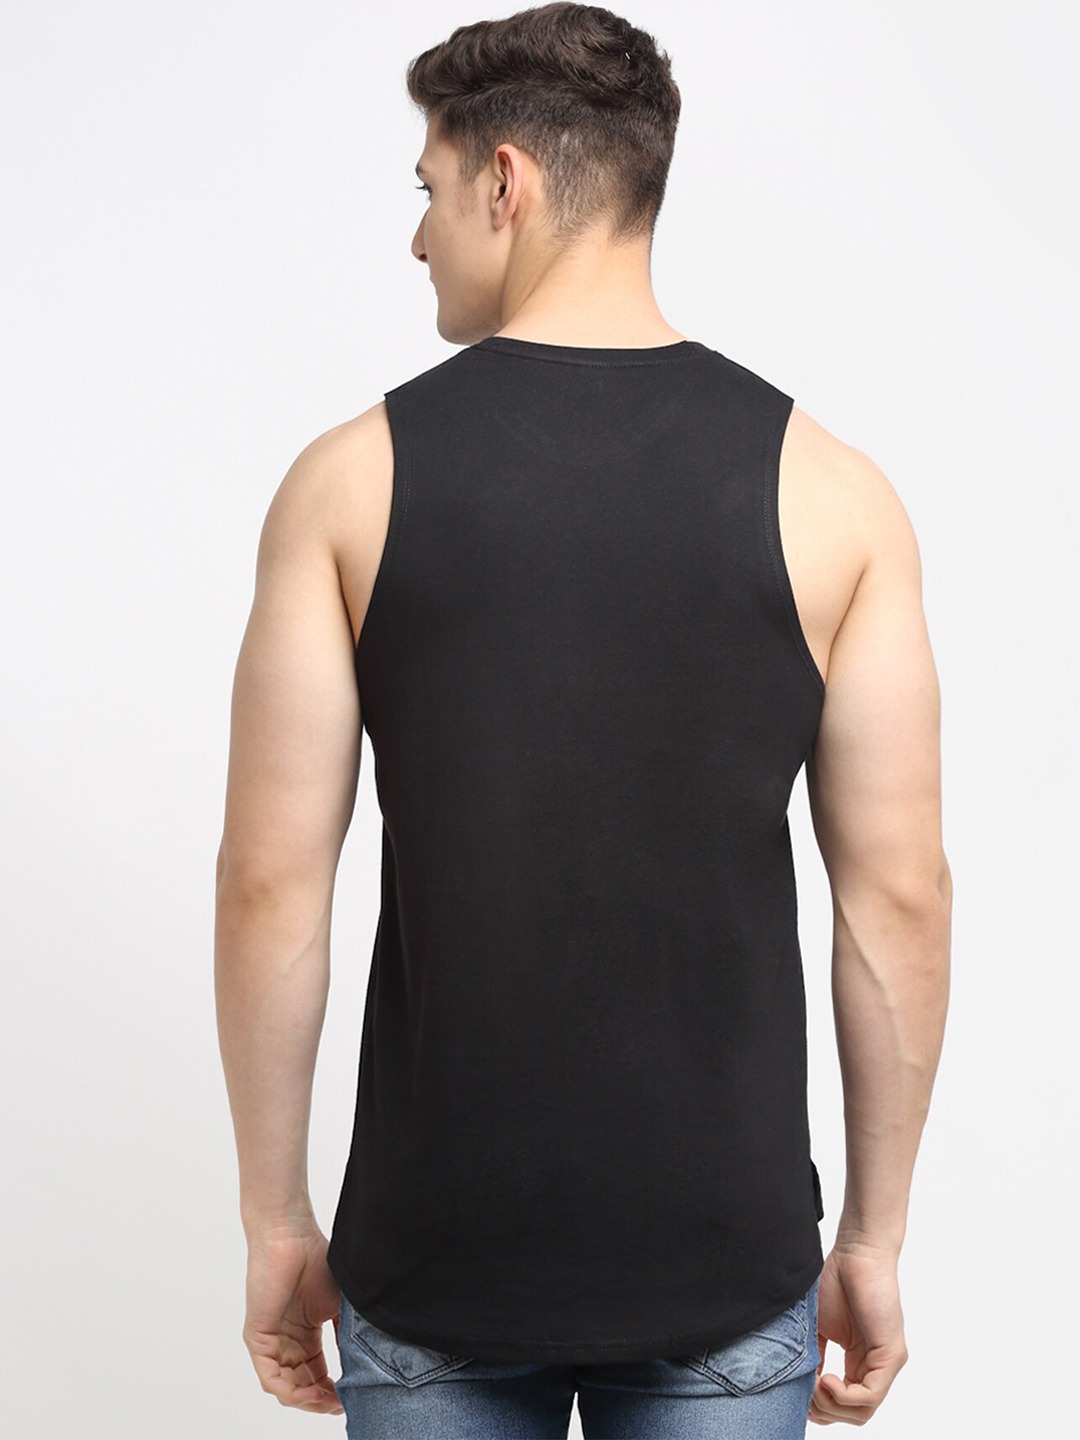 Clothing Innerwear Vests | Friskers Men Black Printed Cotton Innerwear Vests - IA19850